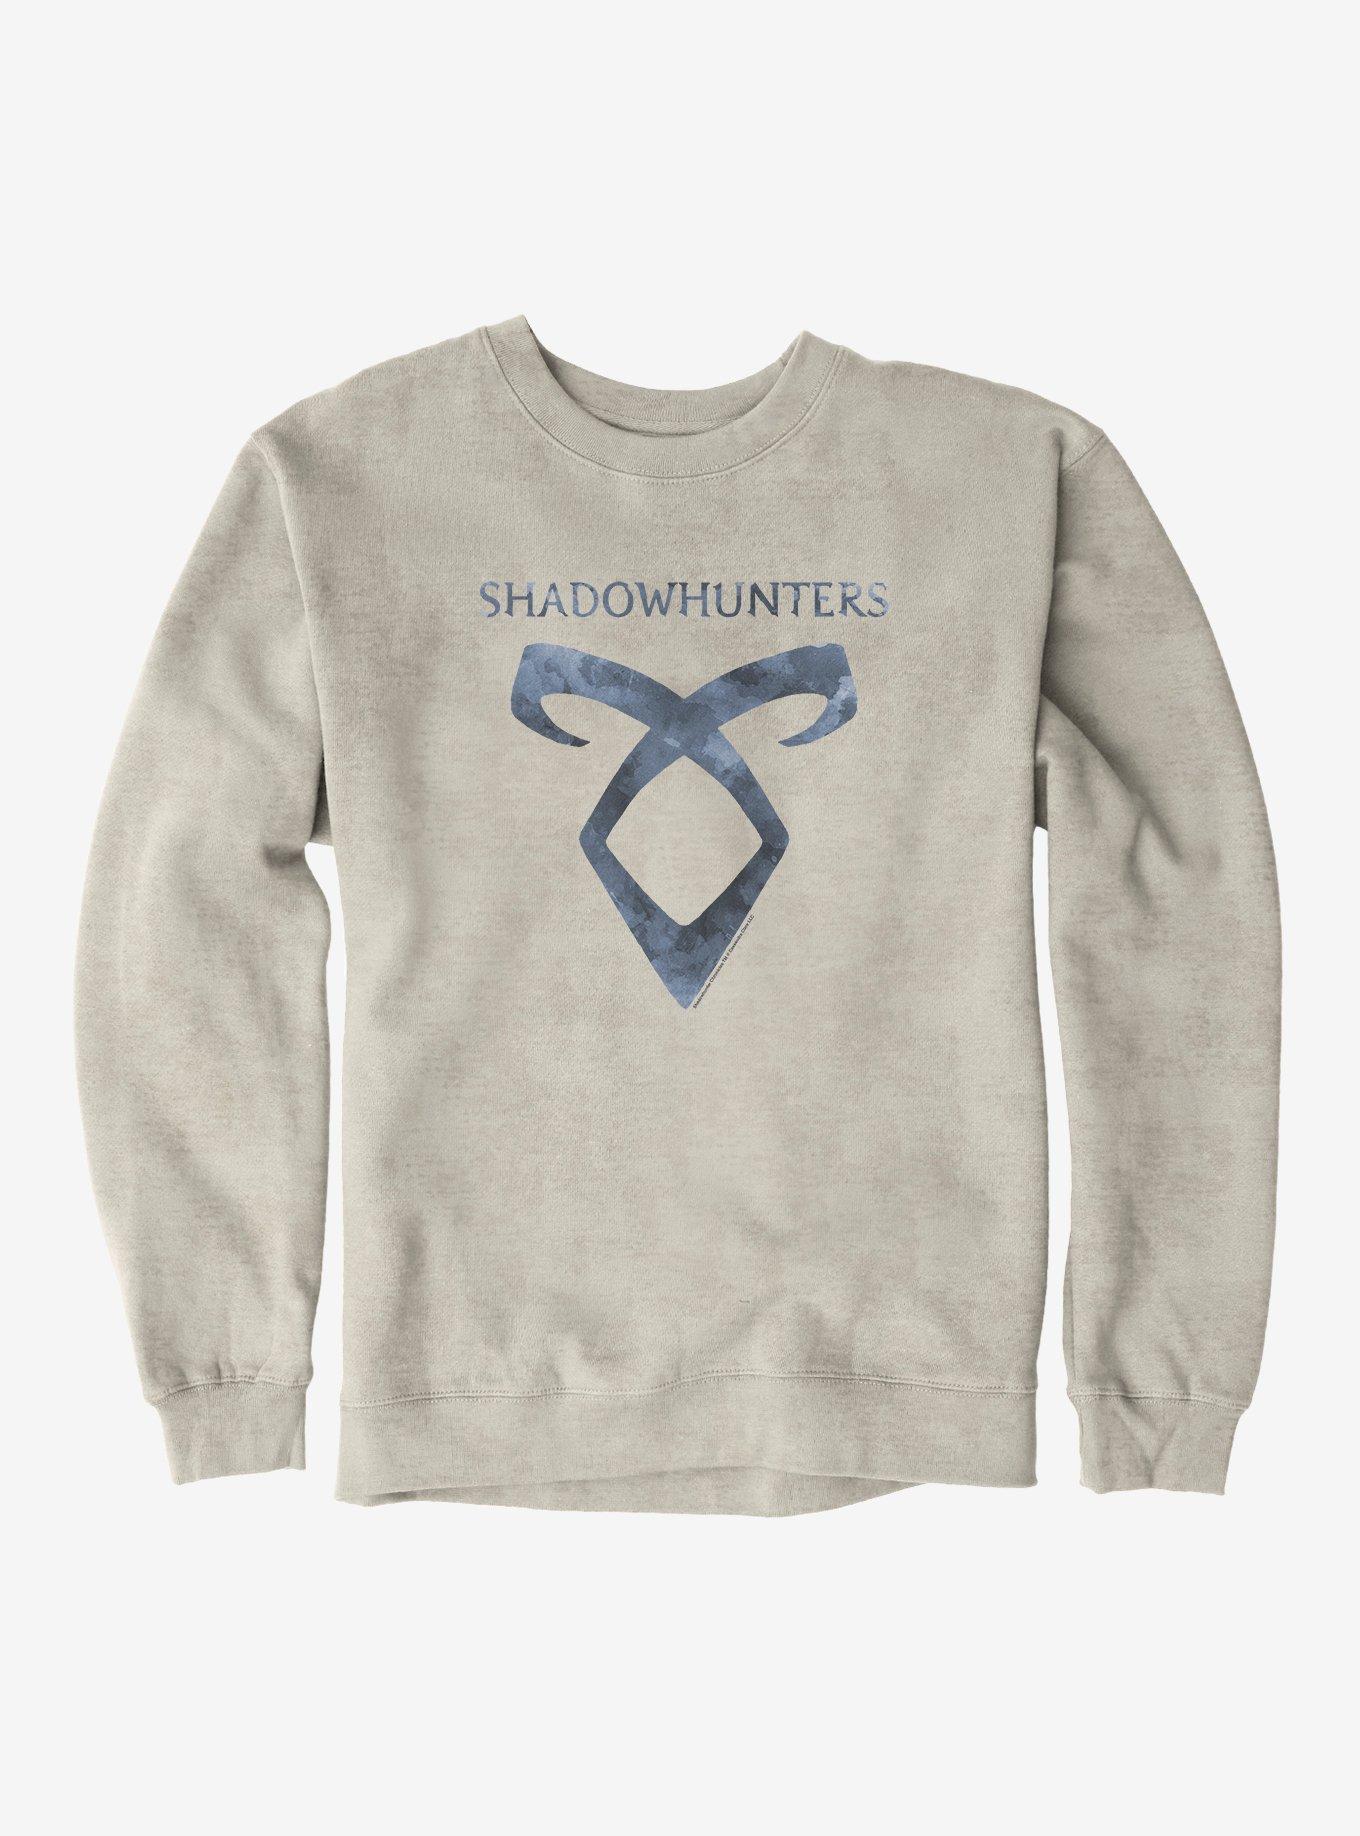 Shadowhunters Angelic Power Symbol Sweatshirt, OATMEAL HEATHER, hi-res